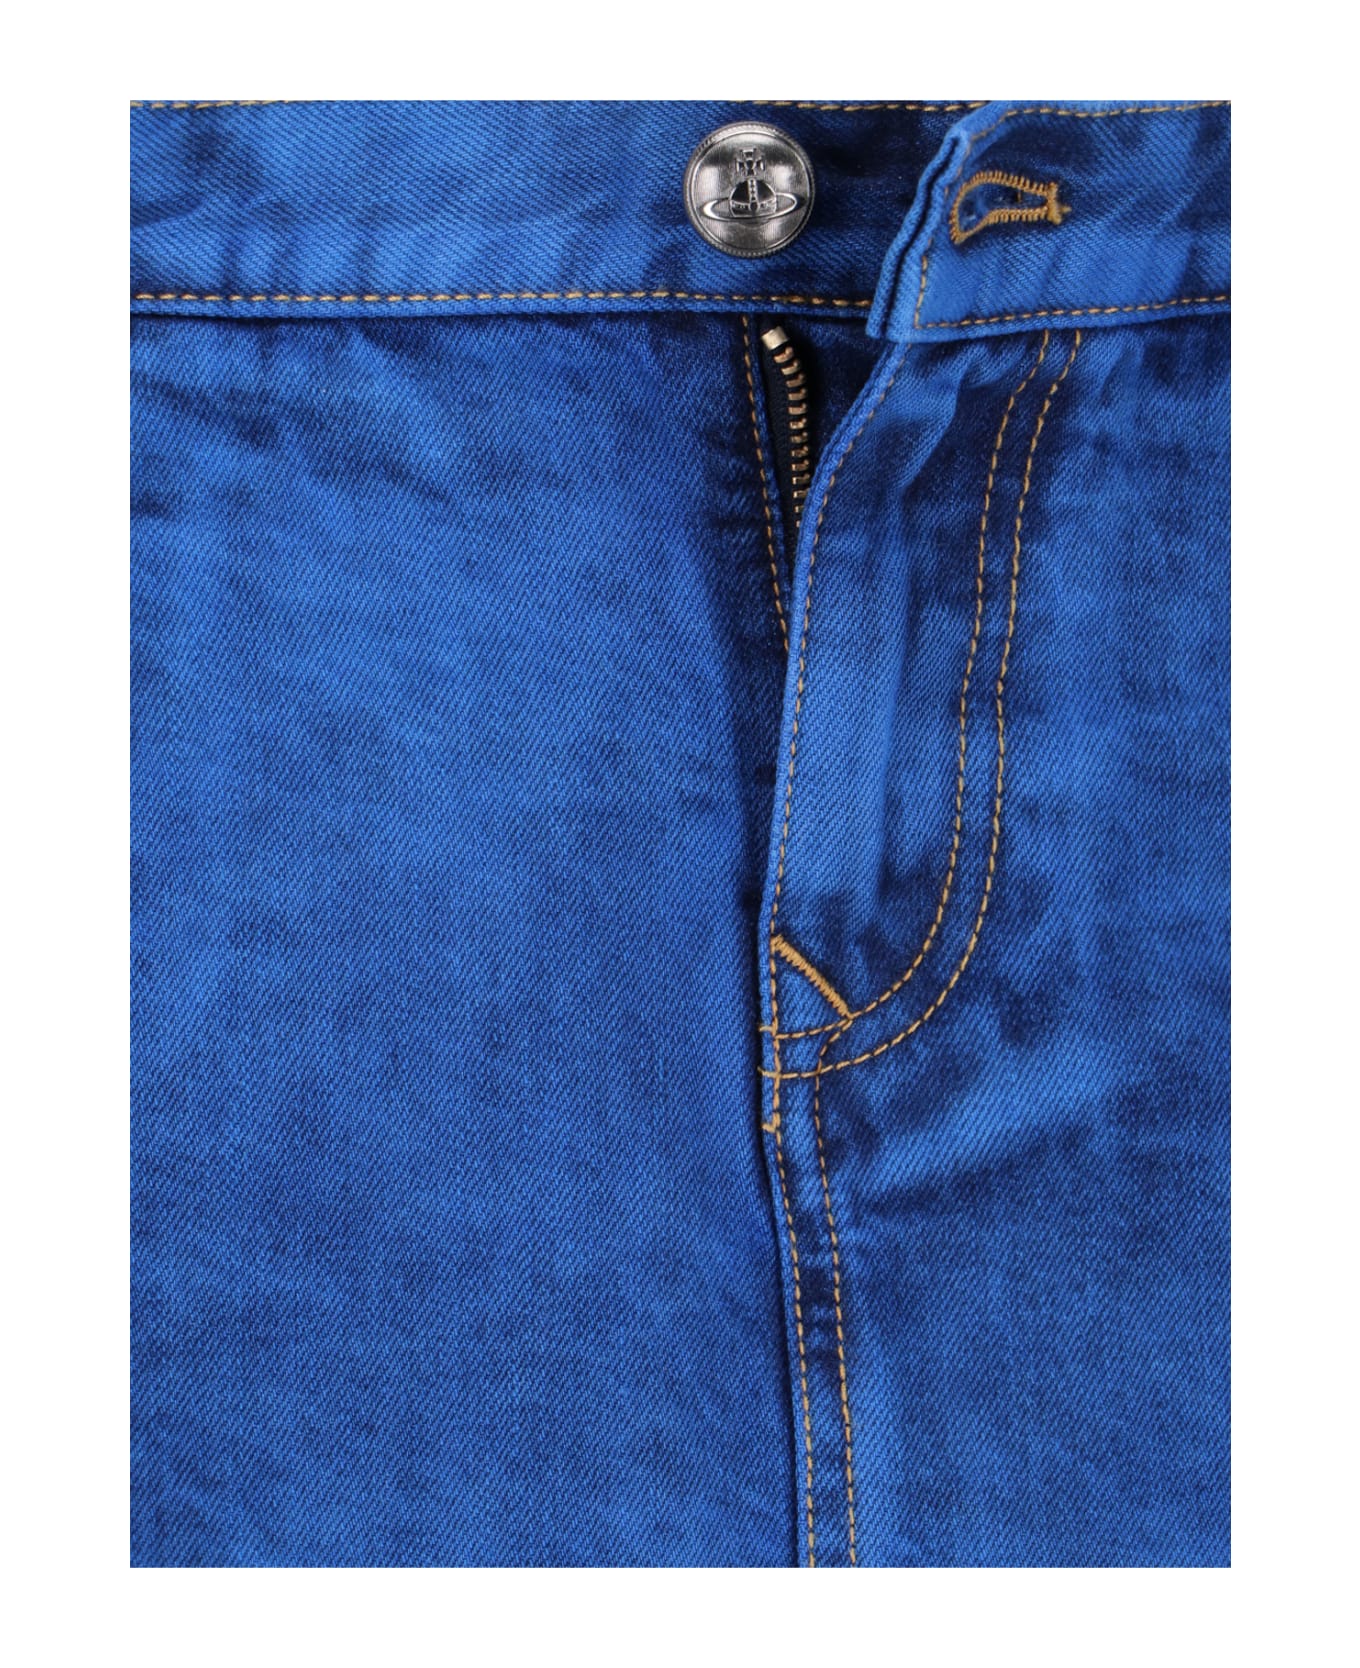 Vivienne Westwood Denim Mini Skirt - Blue